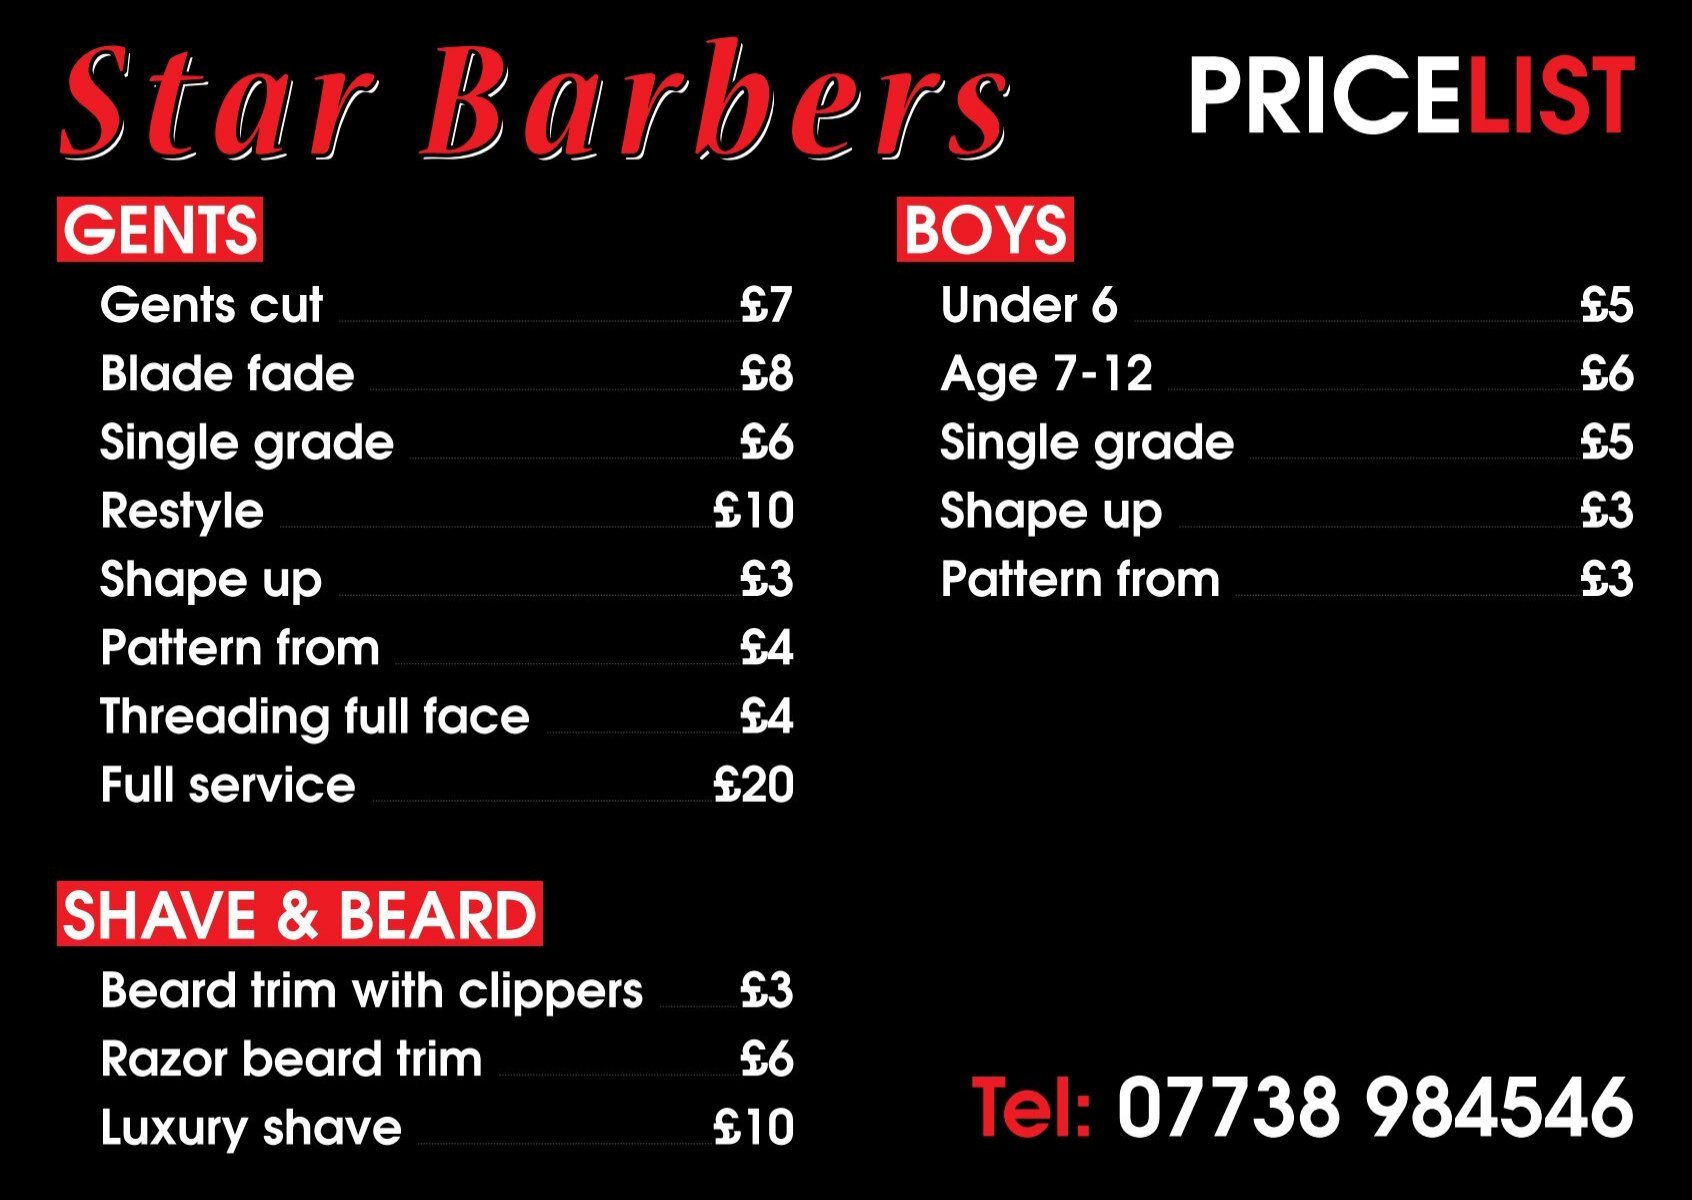 a star barber price